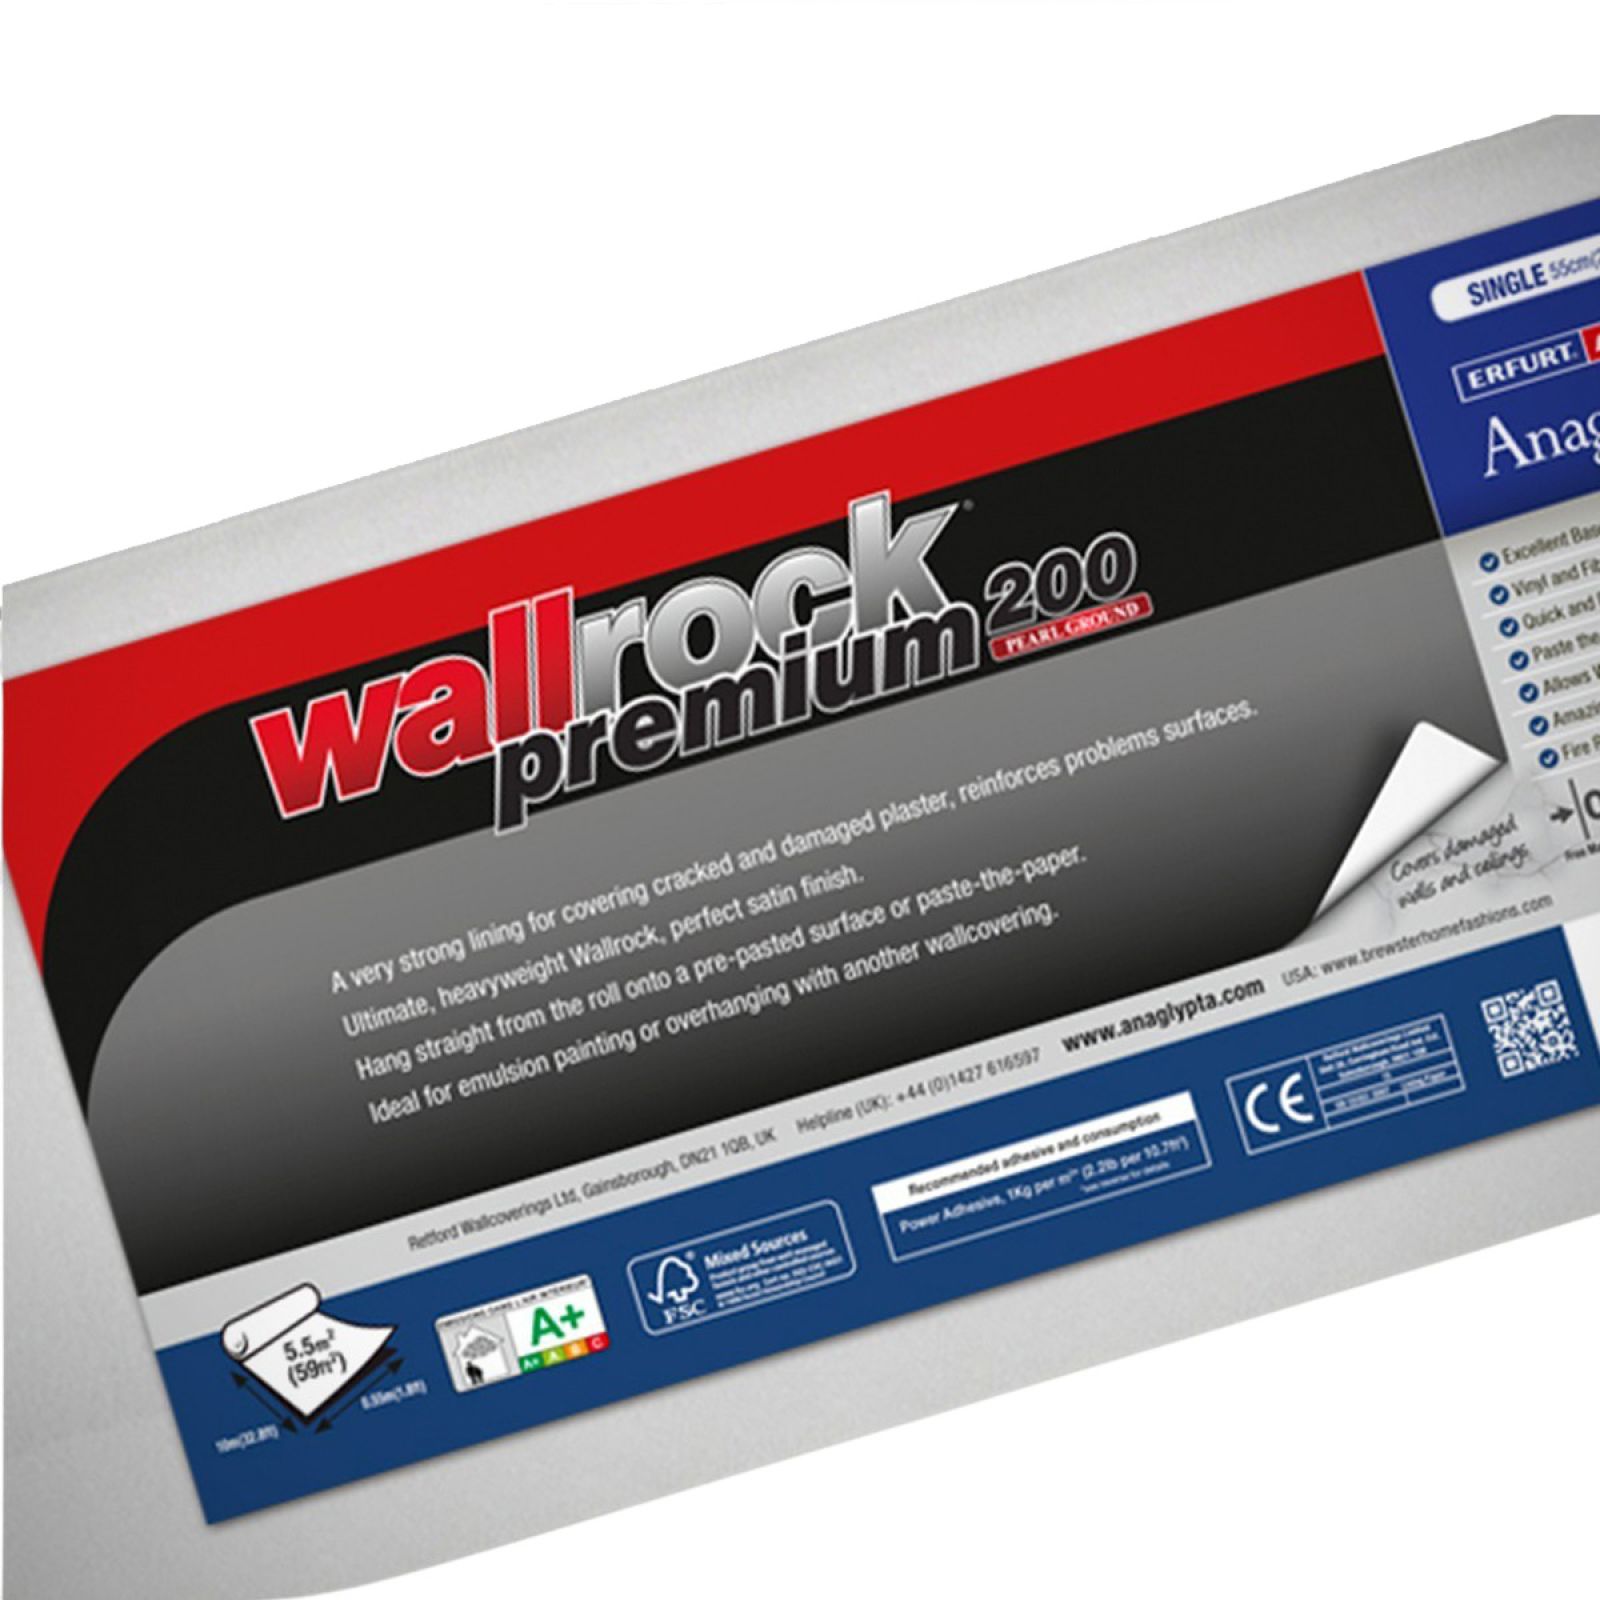 Wallrock Premium 200 Lining Paper